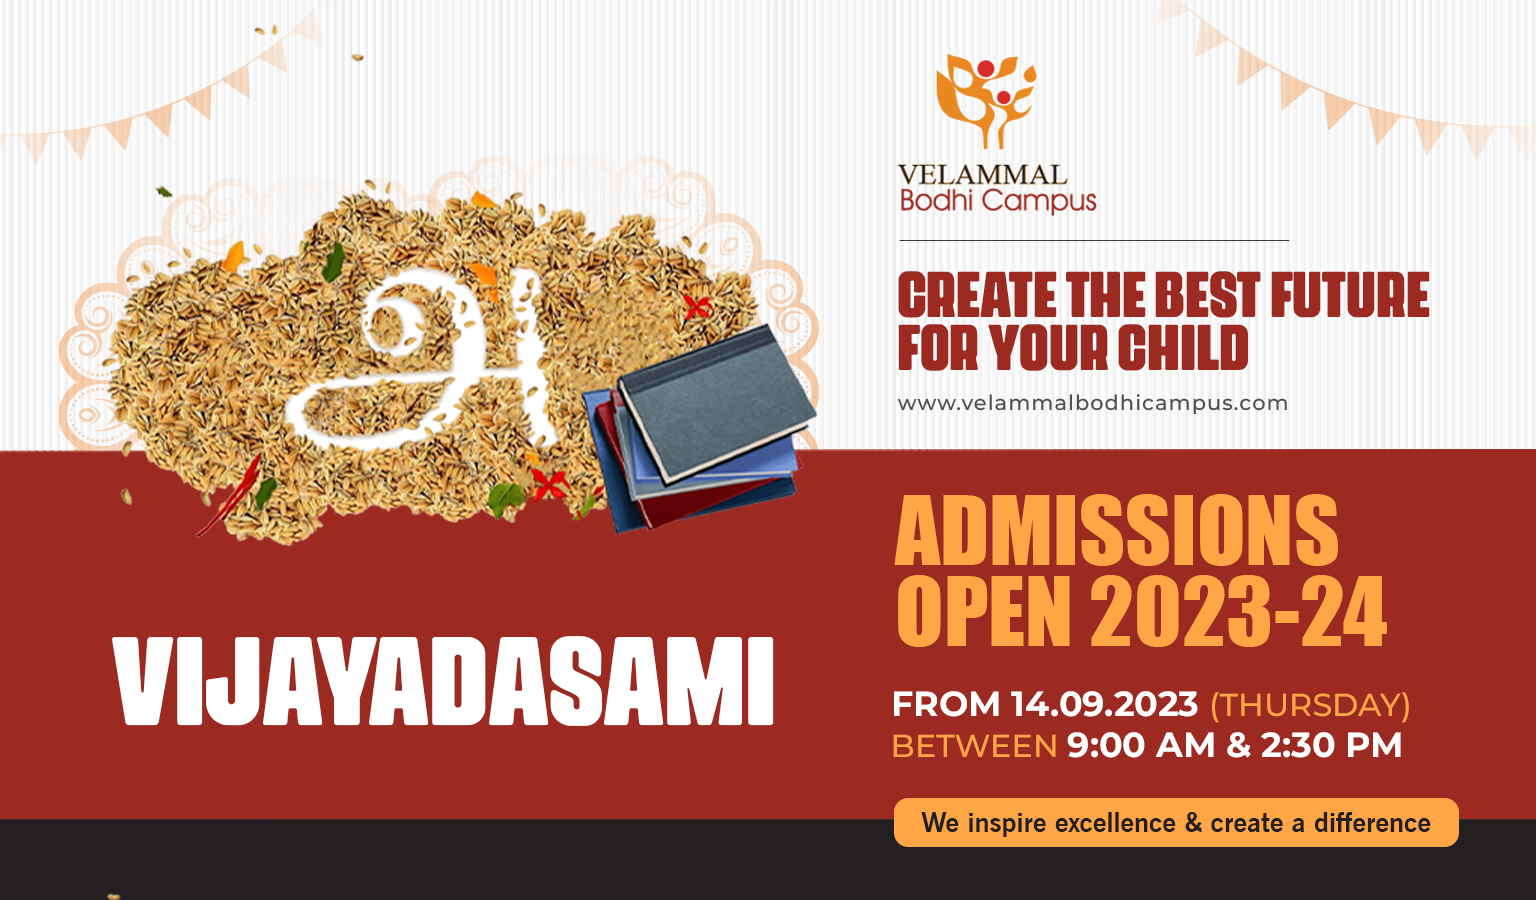 Vijayadasami Admission Open